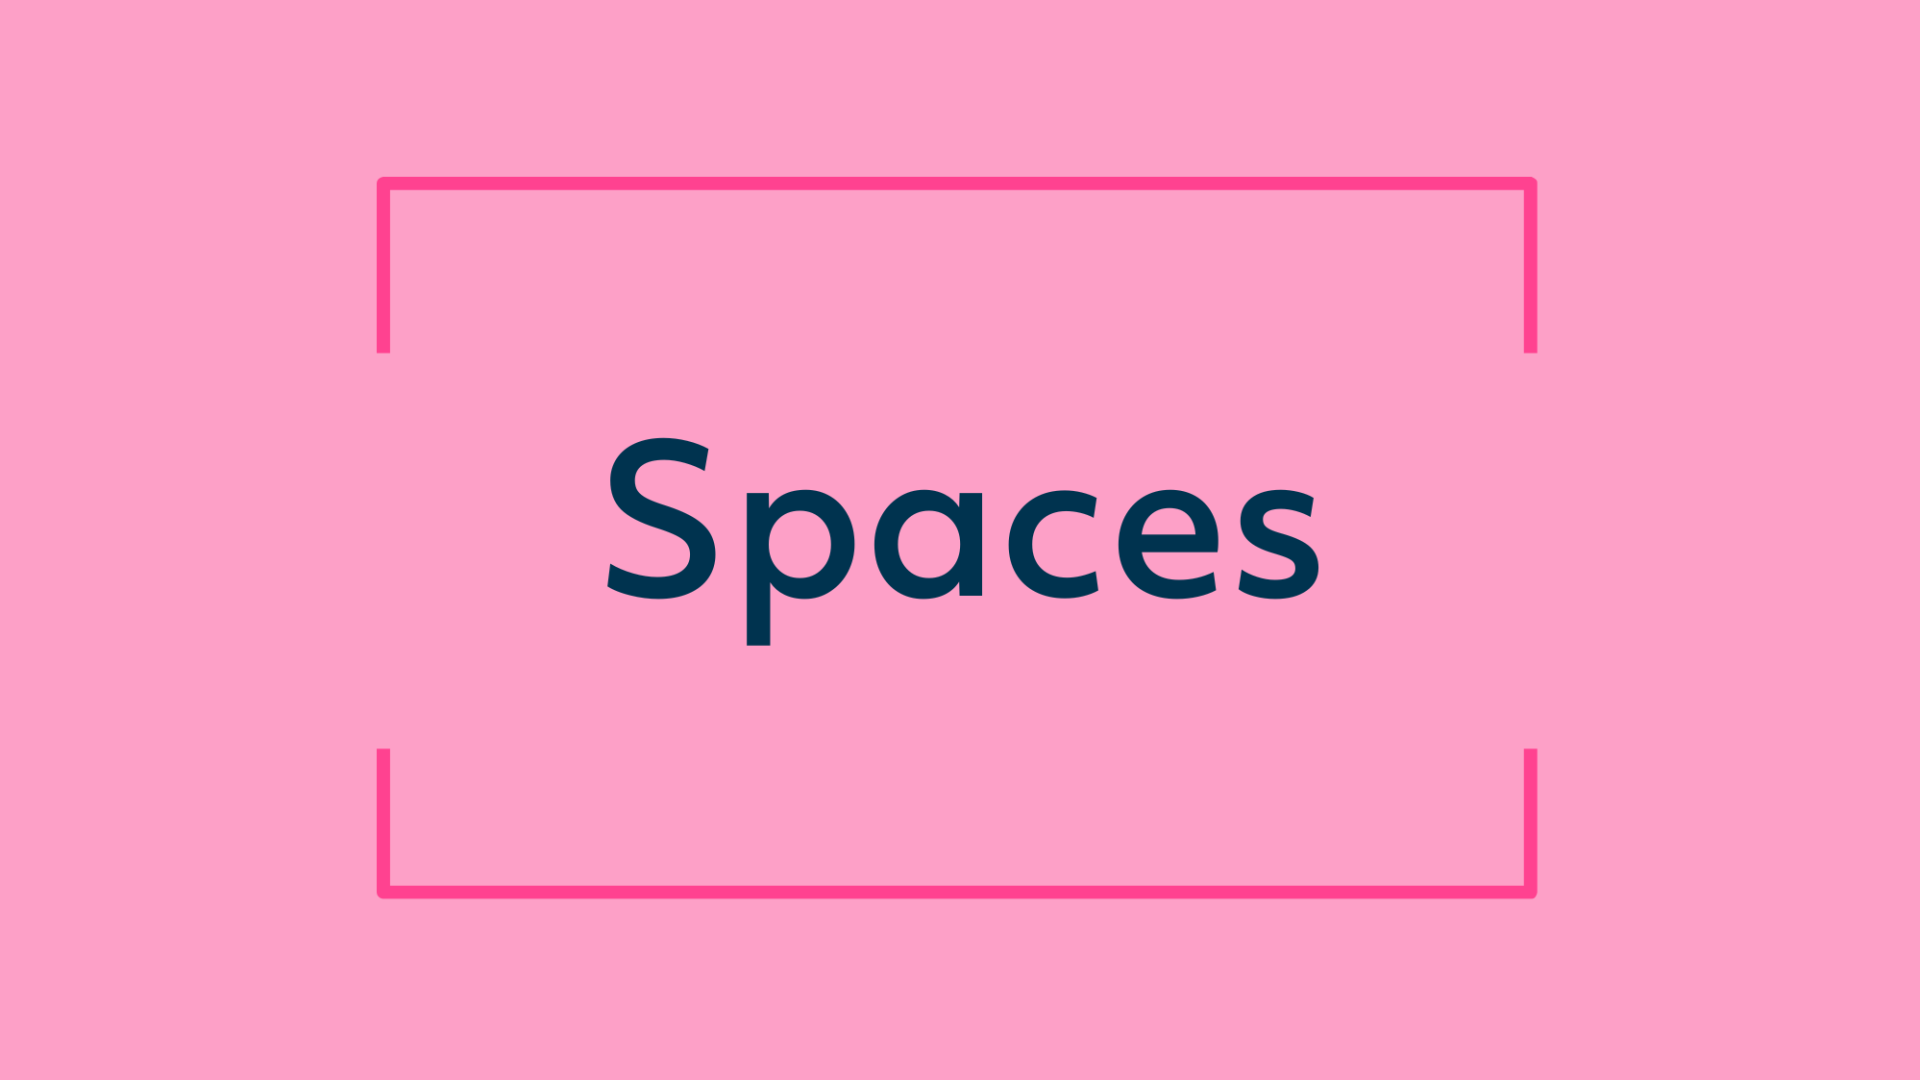 Spaces